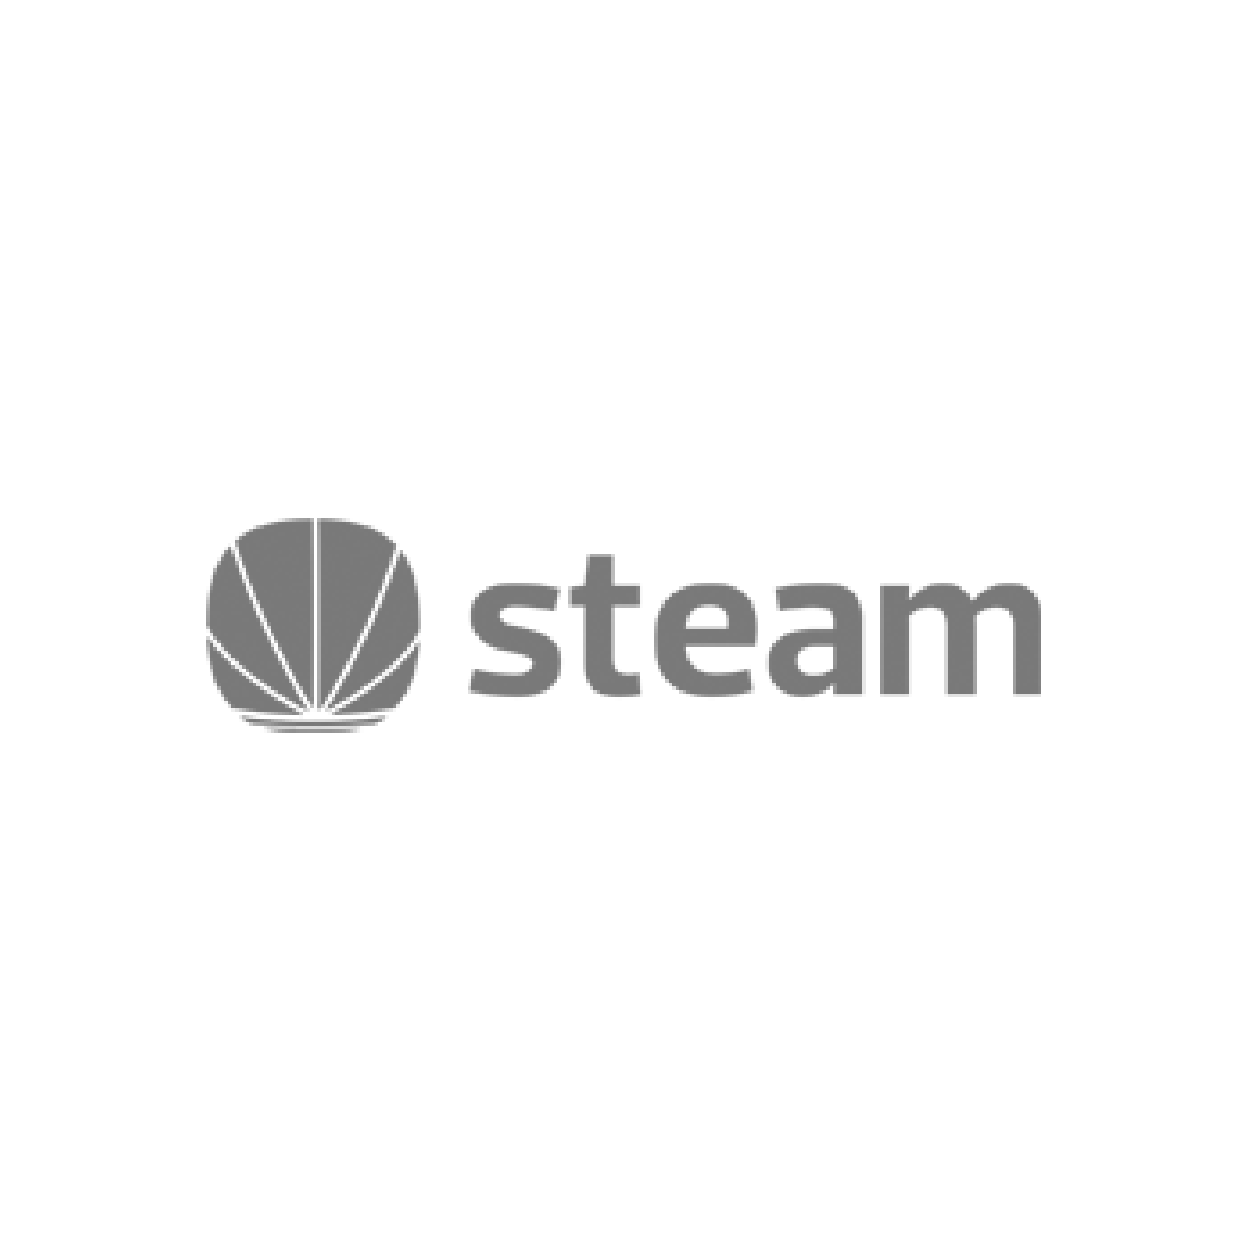 Advertising Agriturismo Steam | Ad.One Agenzia di comunicazione